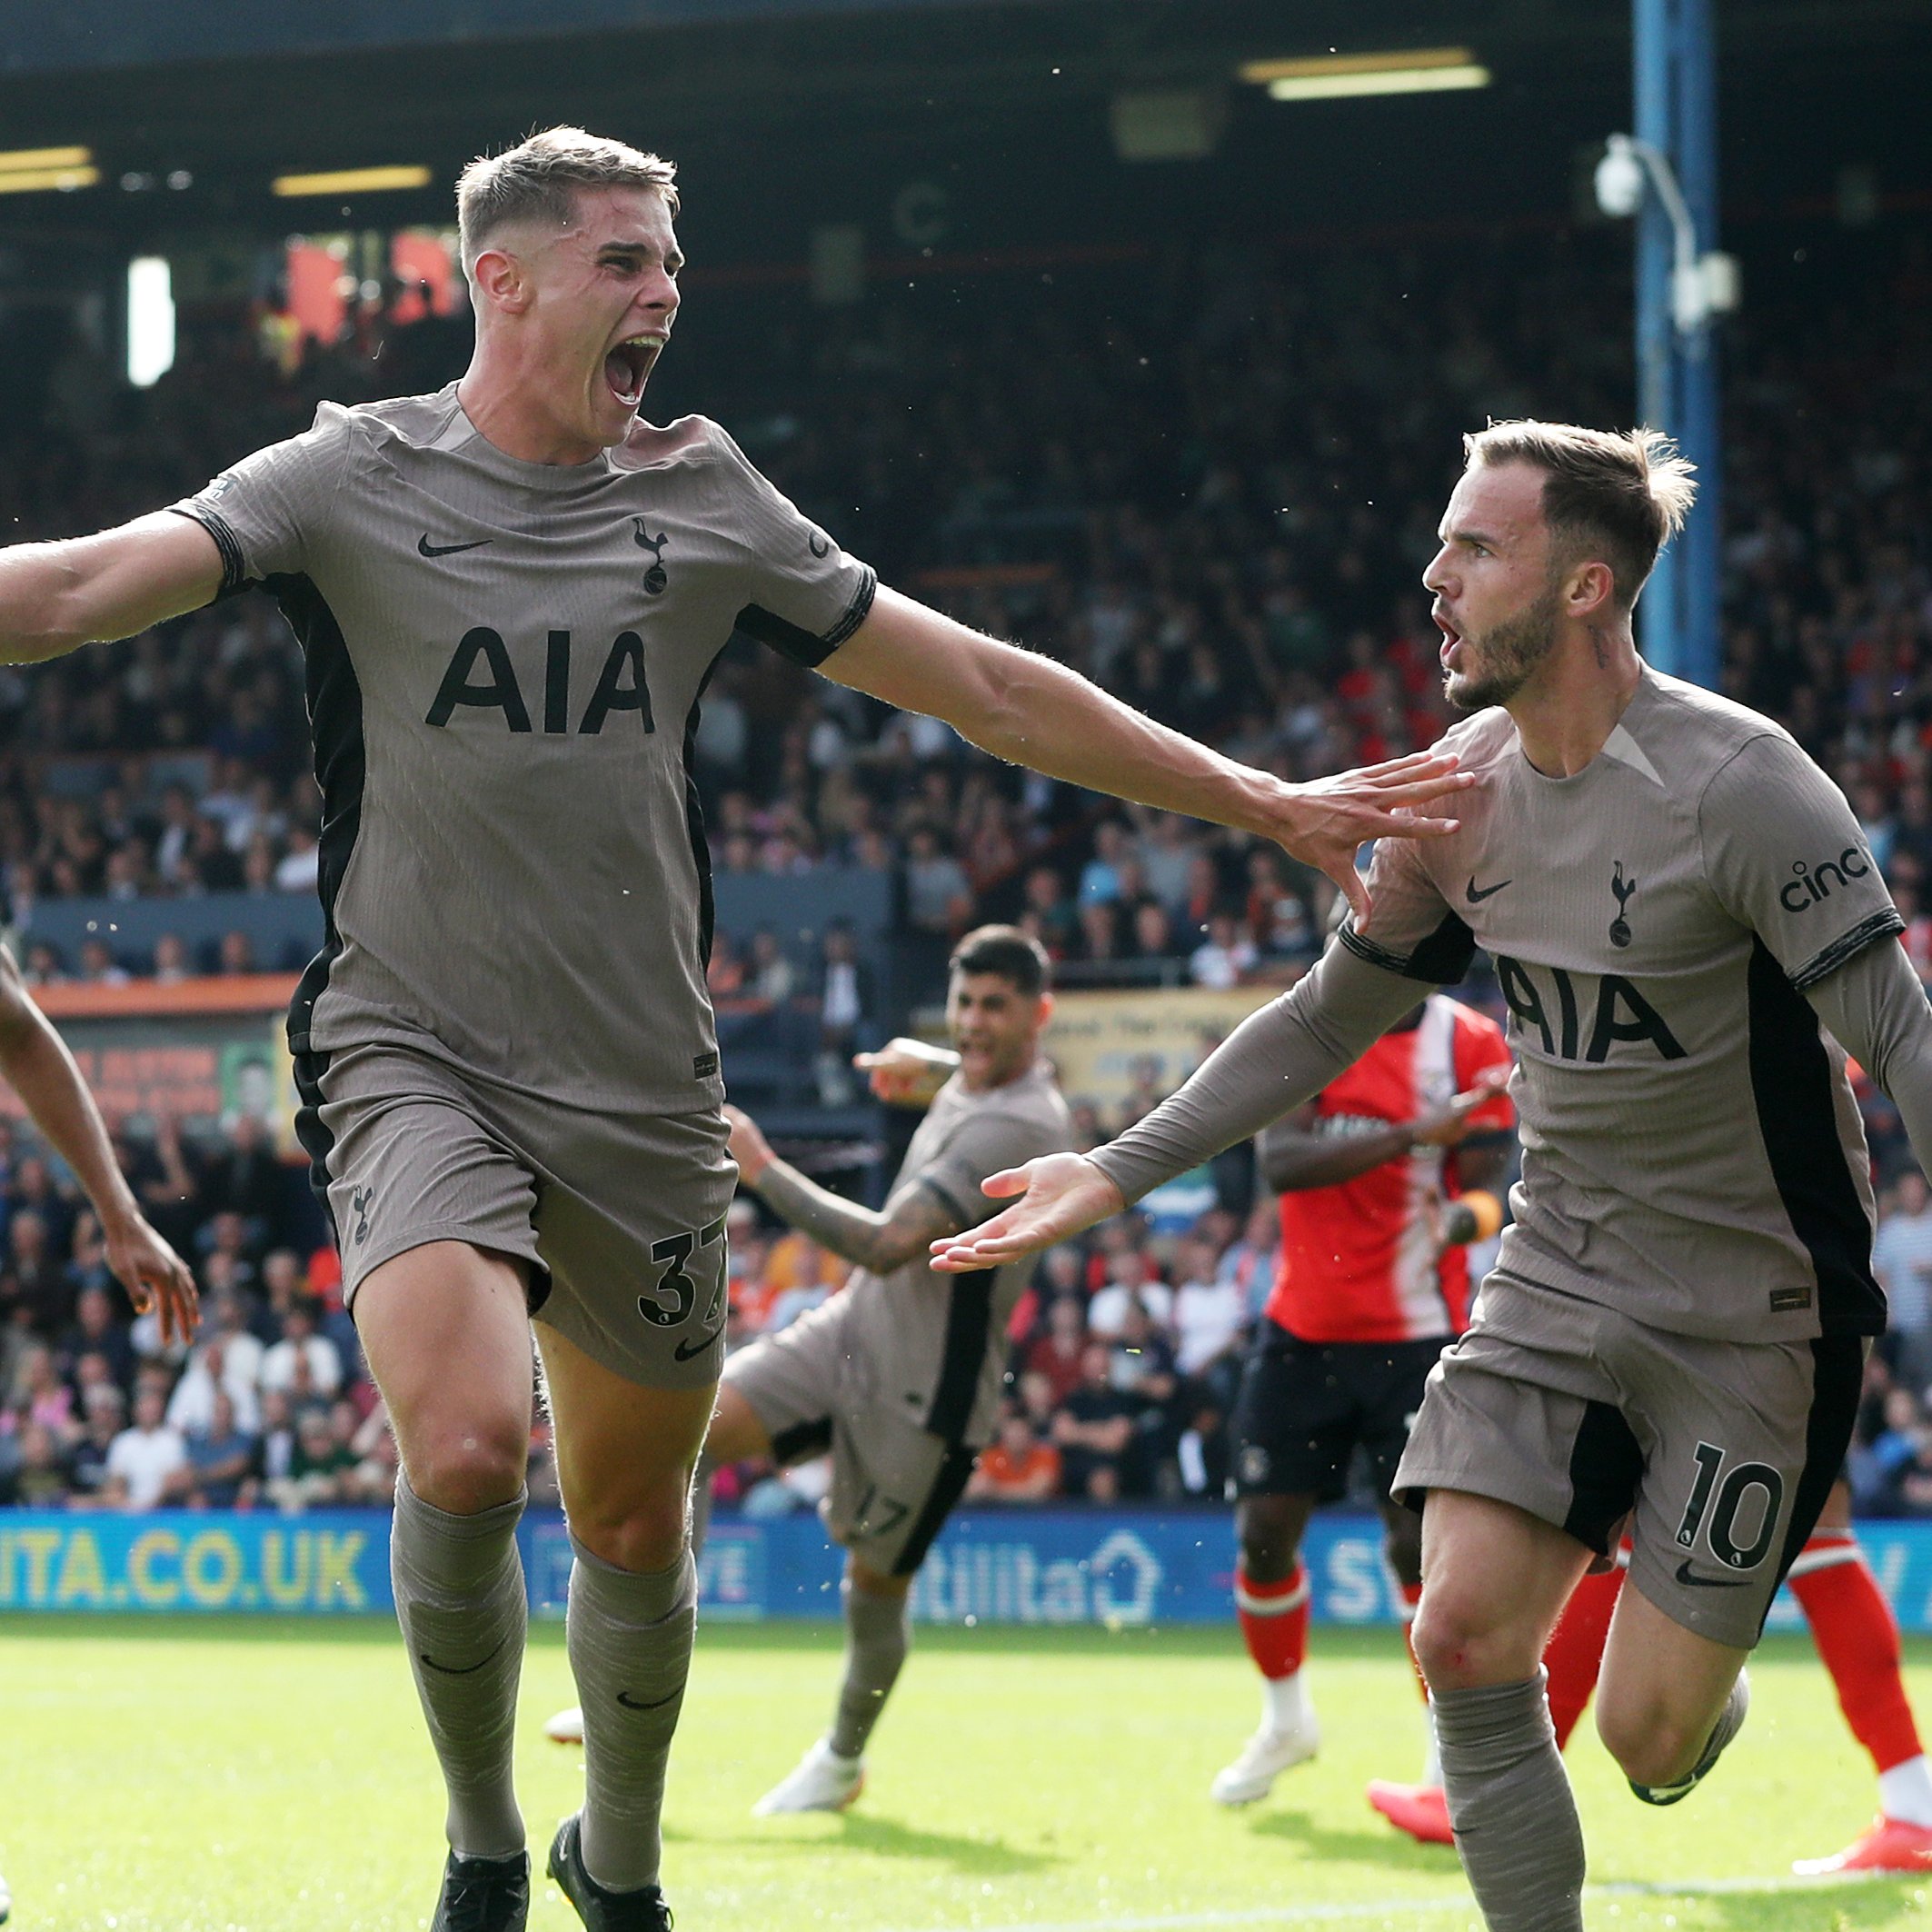 10-man Tottenham move top with narrow win at Luton